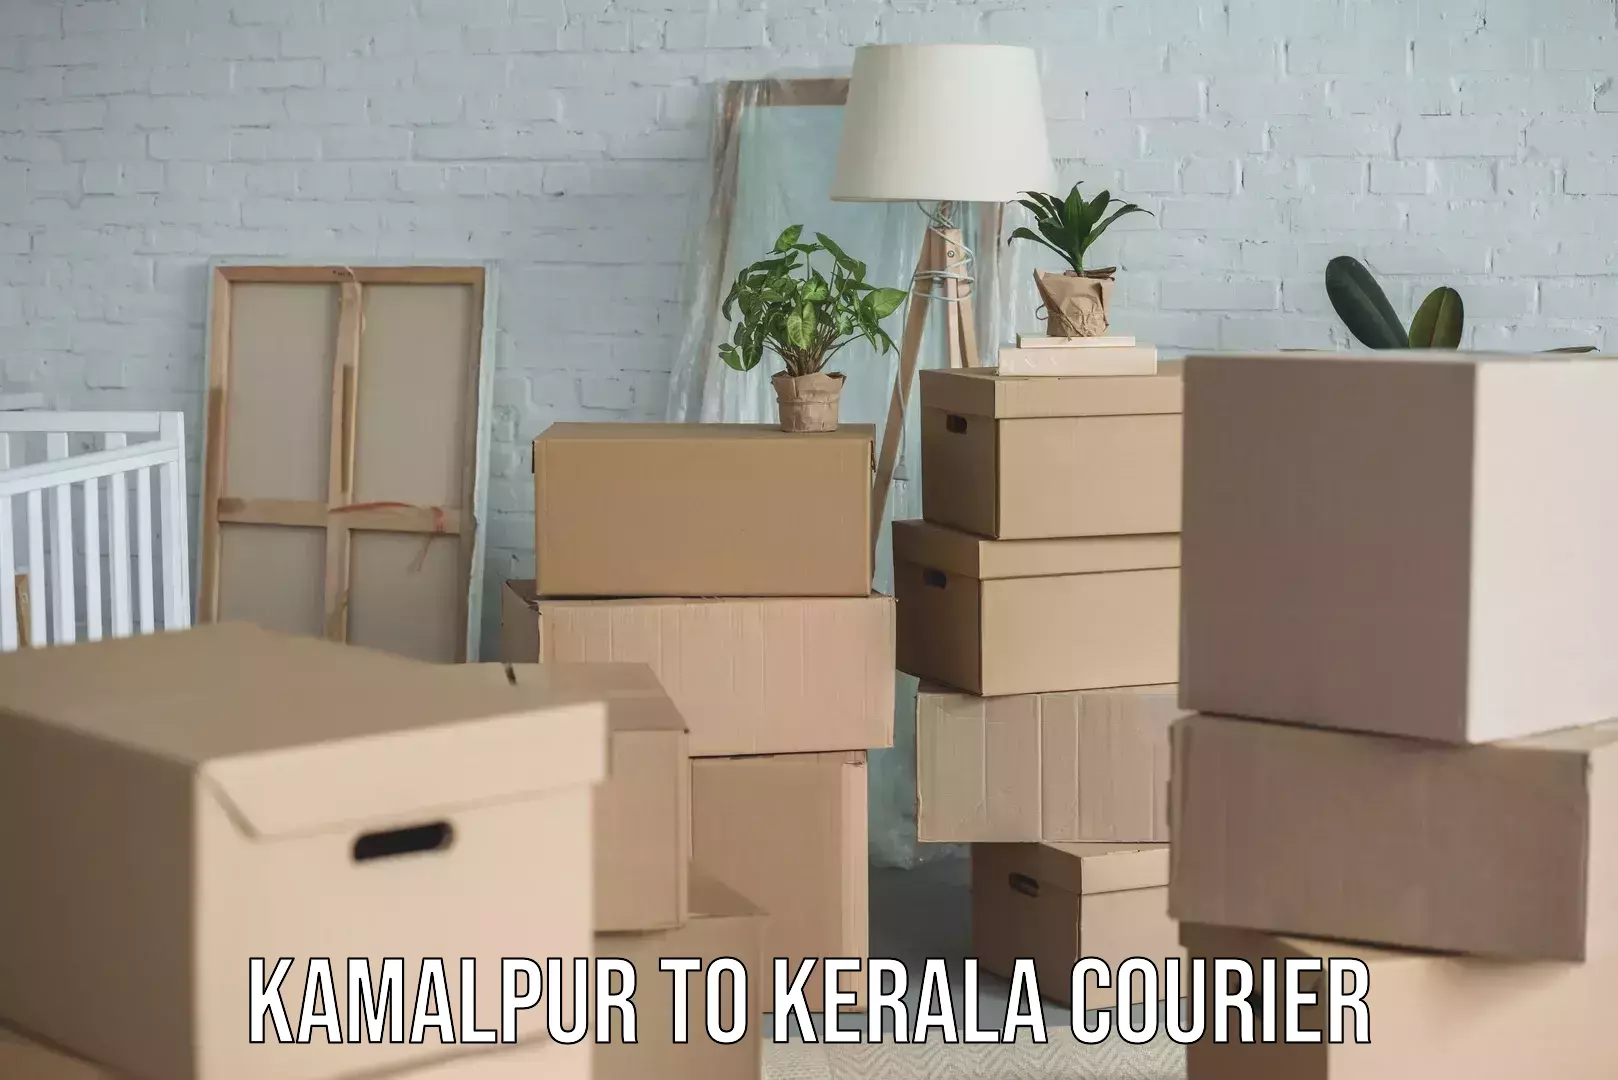 24-hour courier services Kamalpur to Kerala